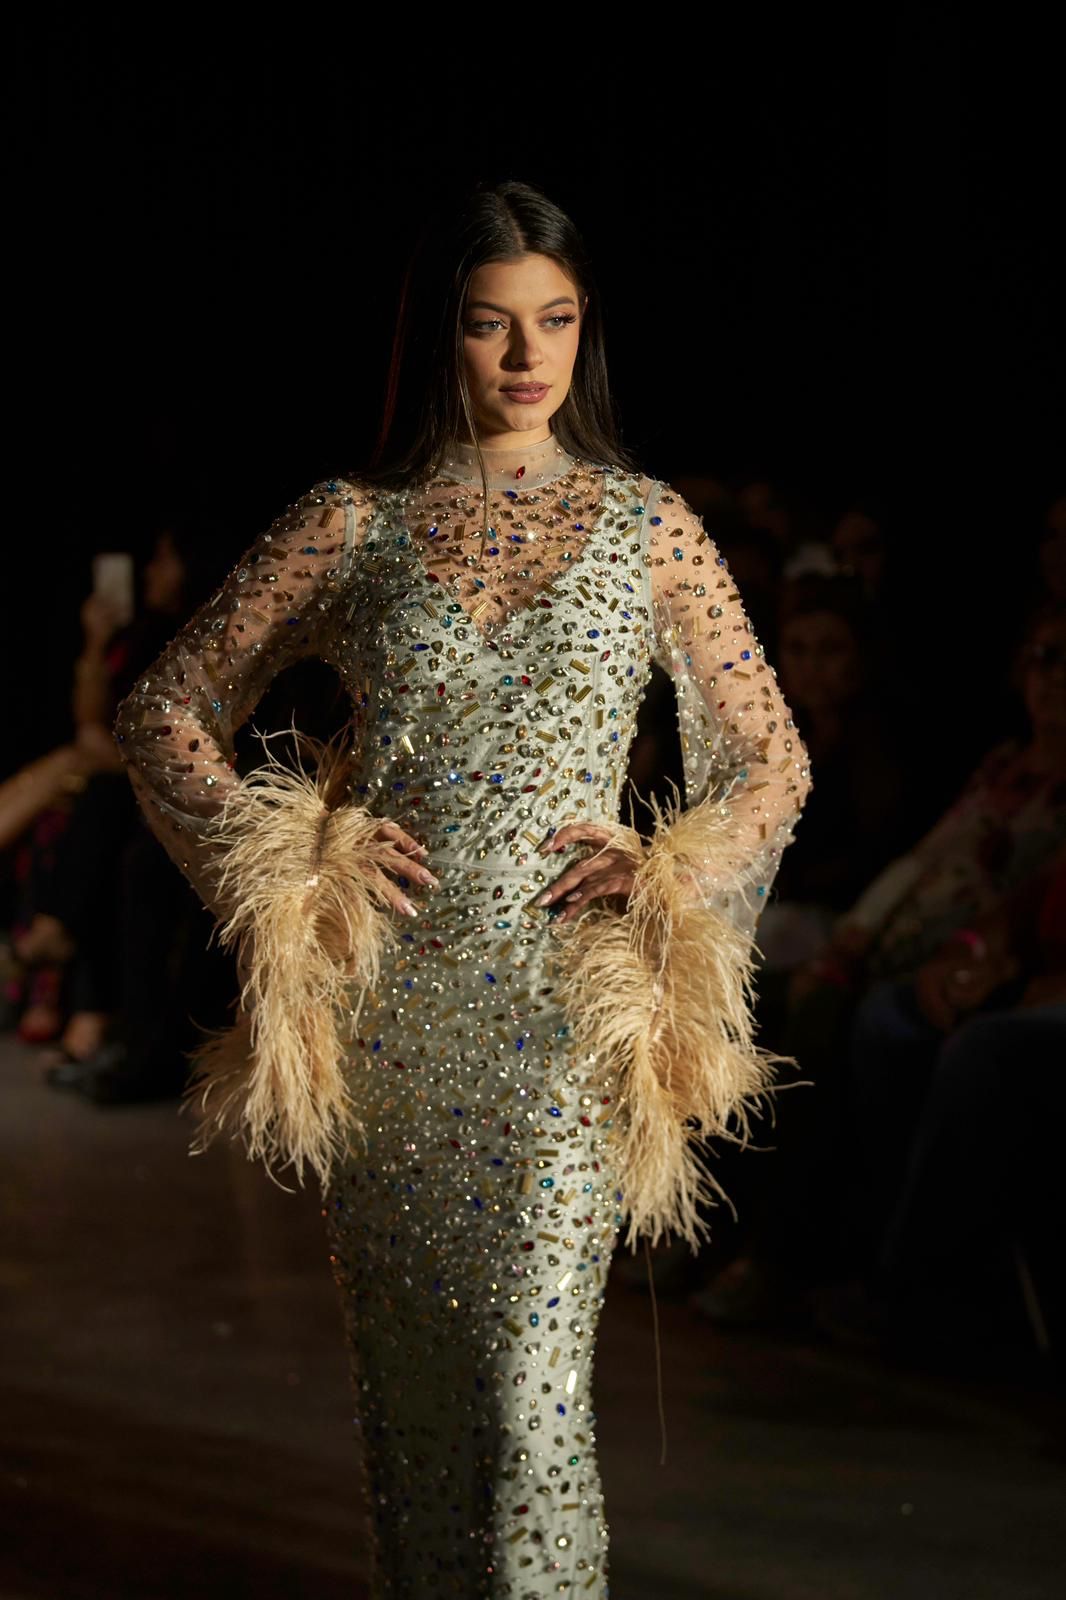 Areyah Multi Color Feather Dress